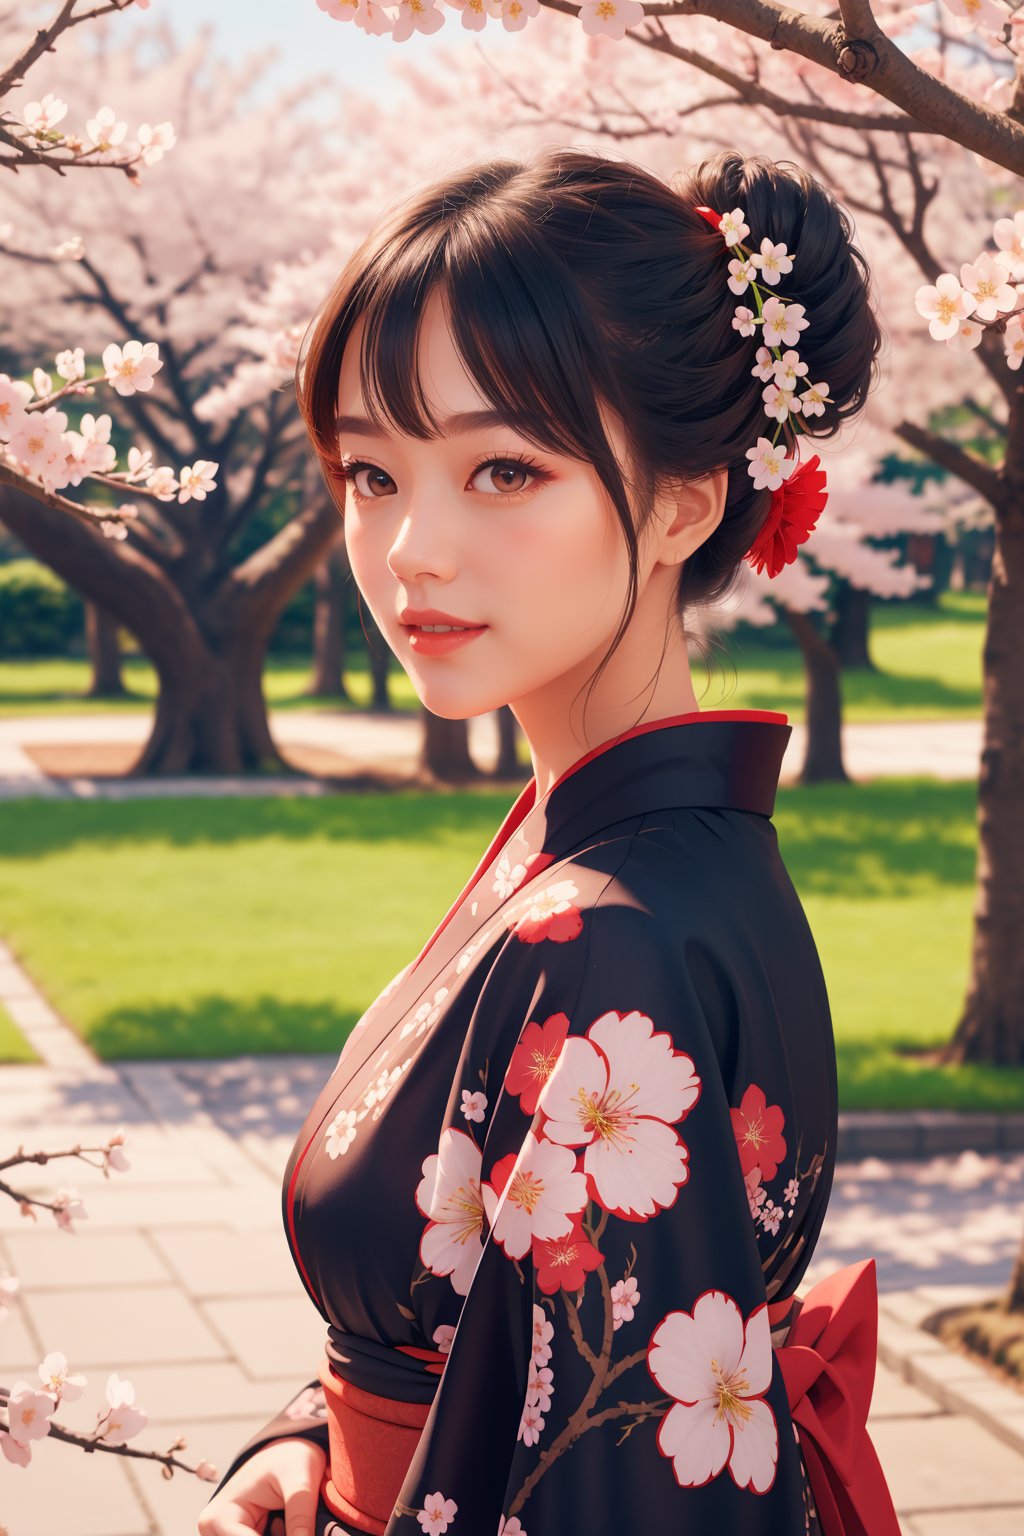 masterpiece, best quality, sharp focus, detailed floral kimono, red black kimono, outdoors, half updo, happiness, cherry blossom, photorealistic